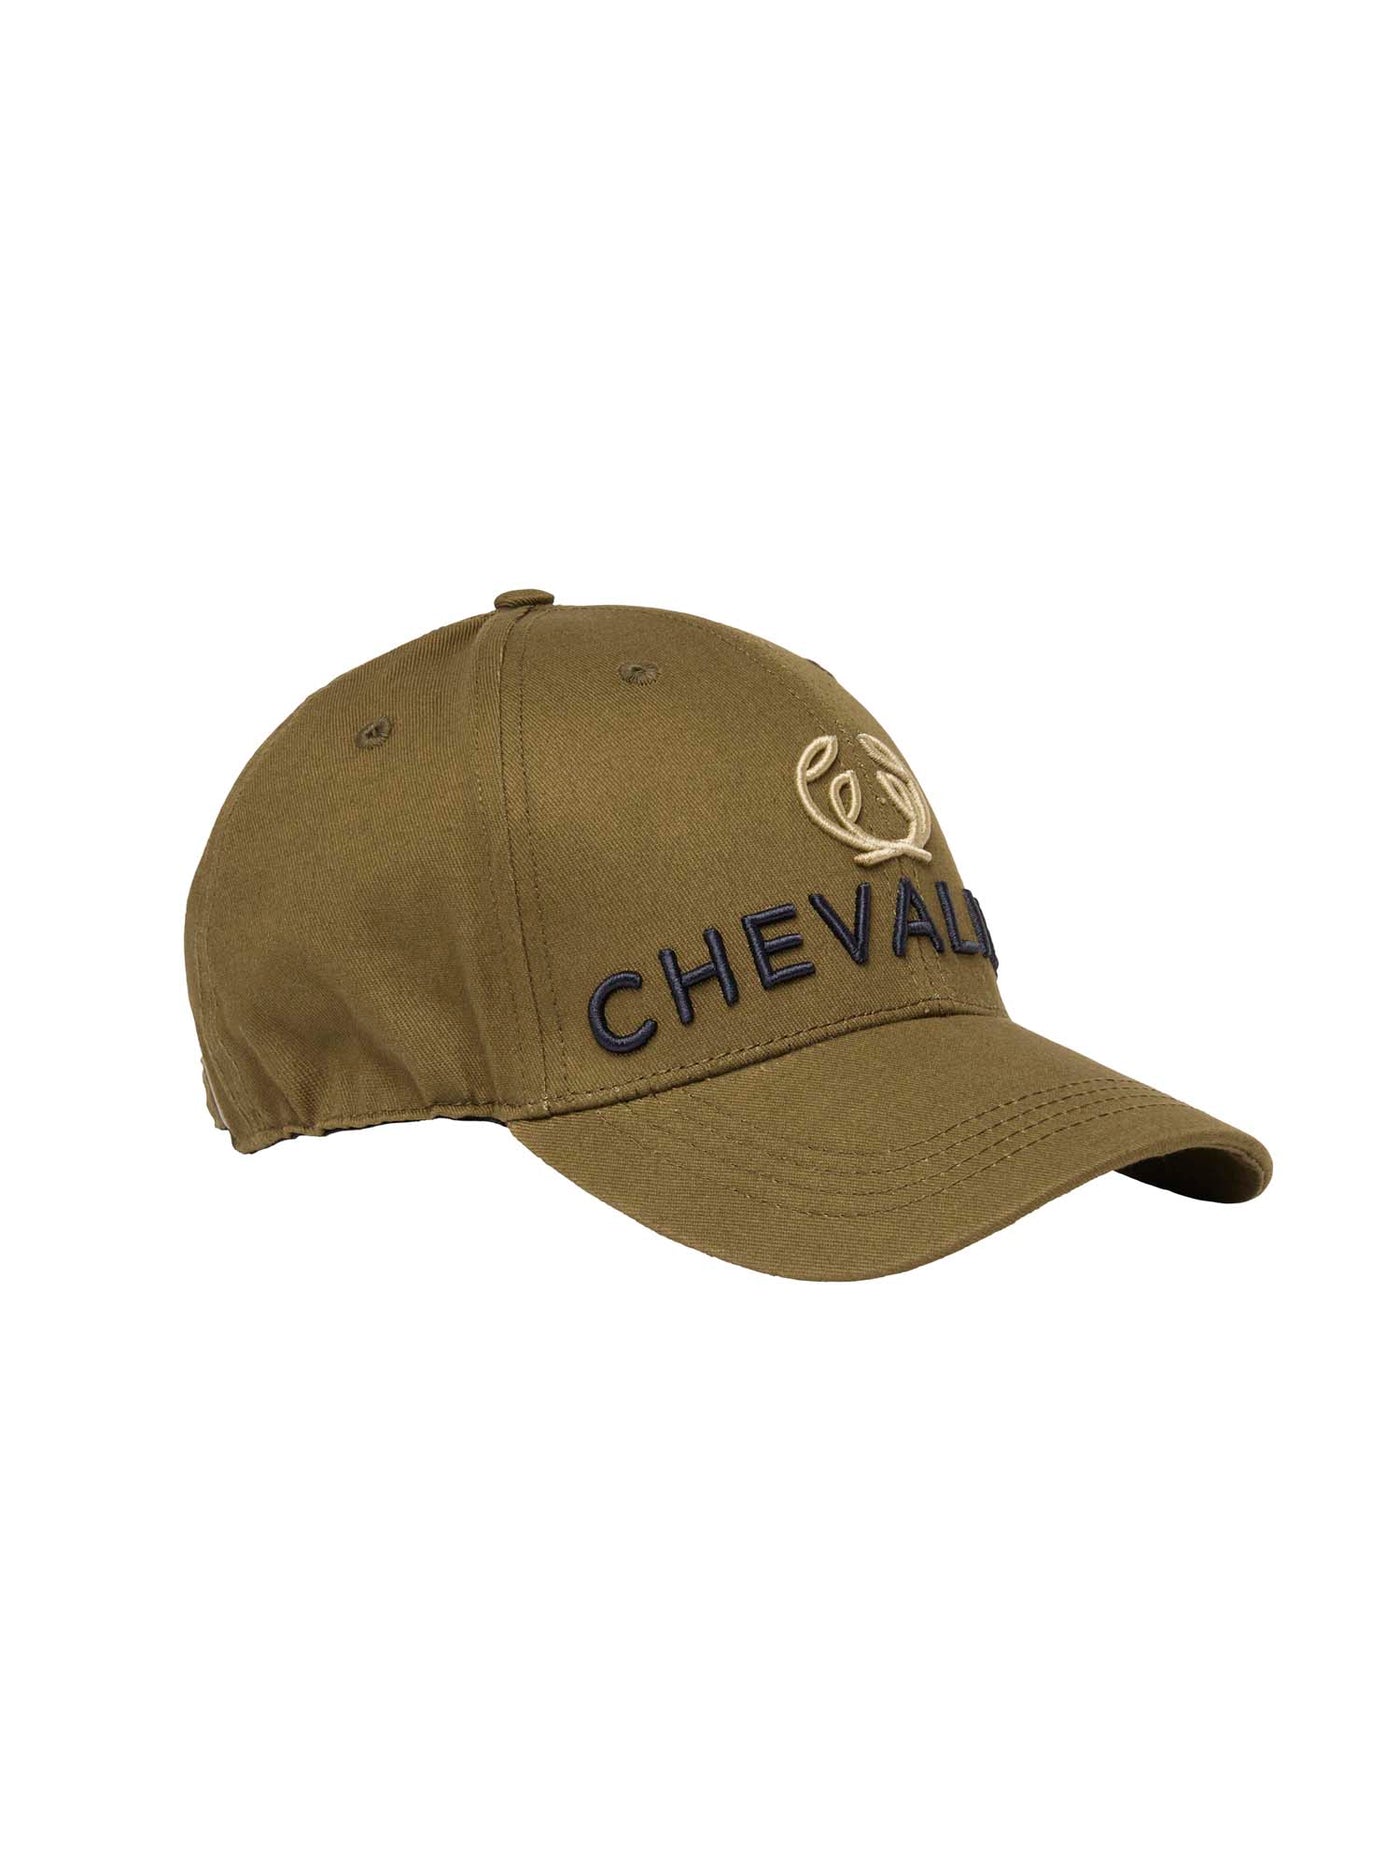 Chevalier, Elm logo Cap, Forest green